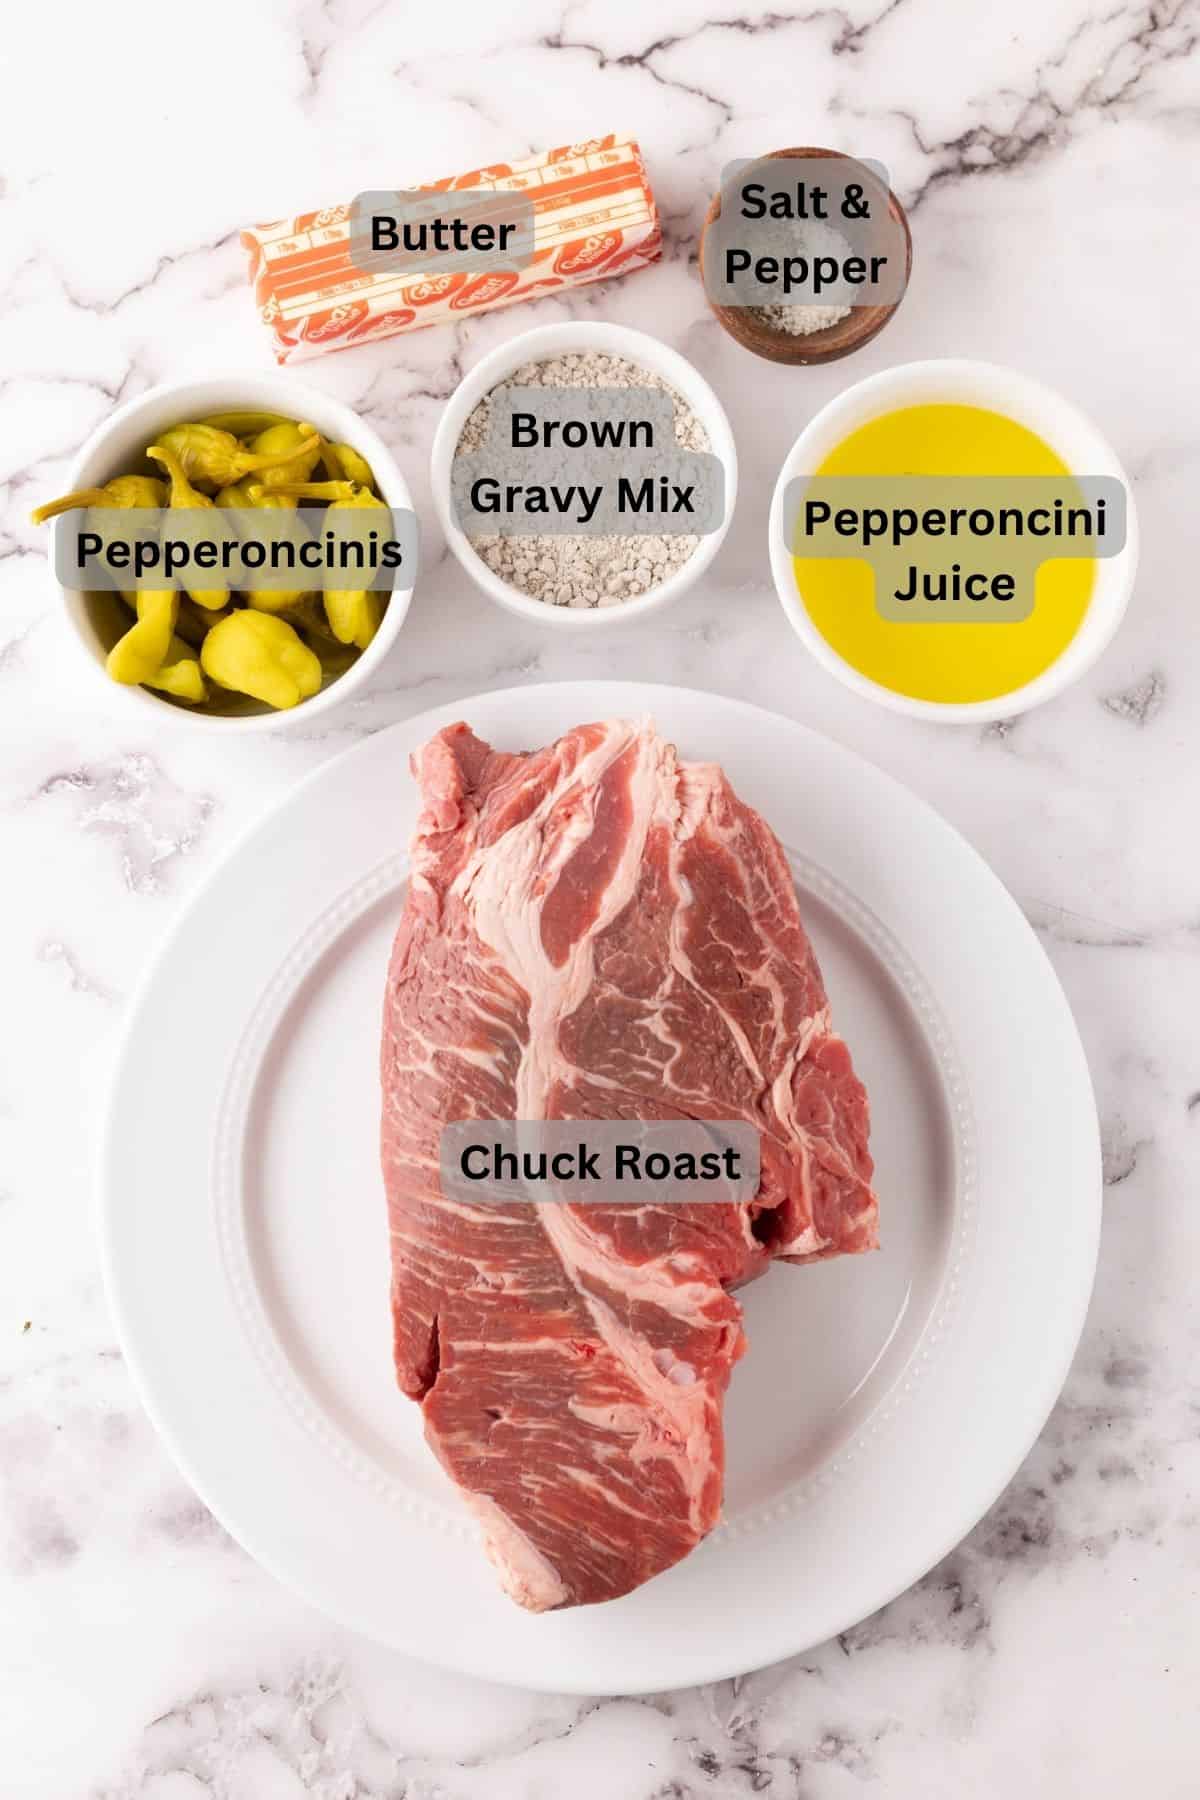 Digitally labeled ingredients for Mississippi pot roast.